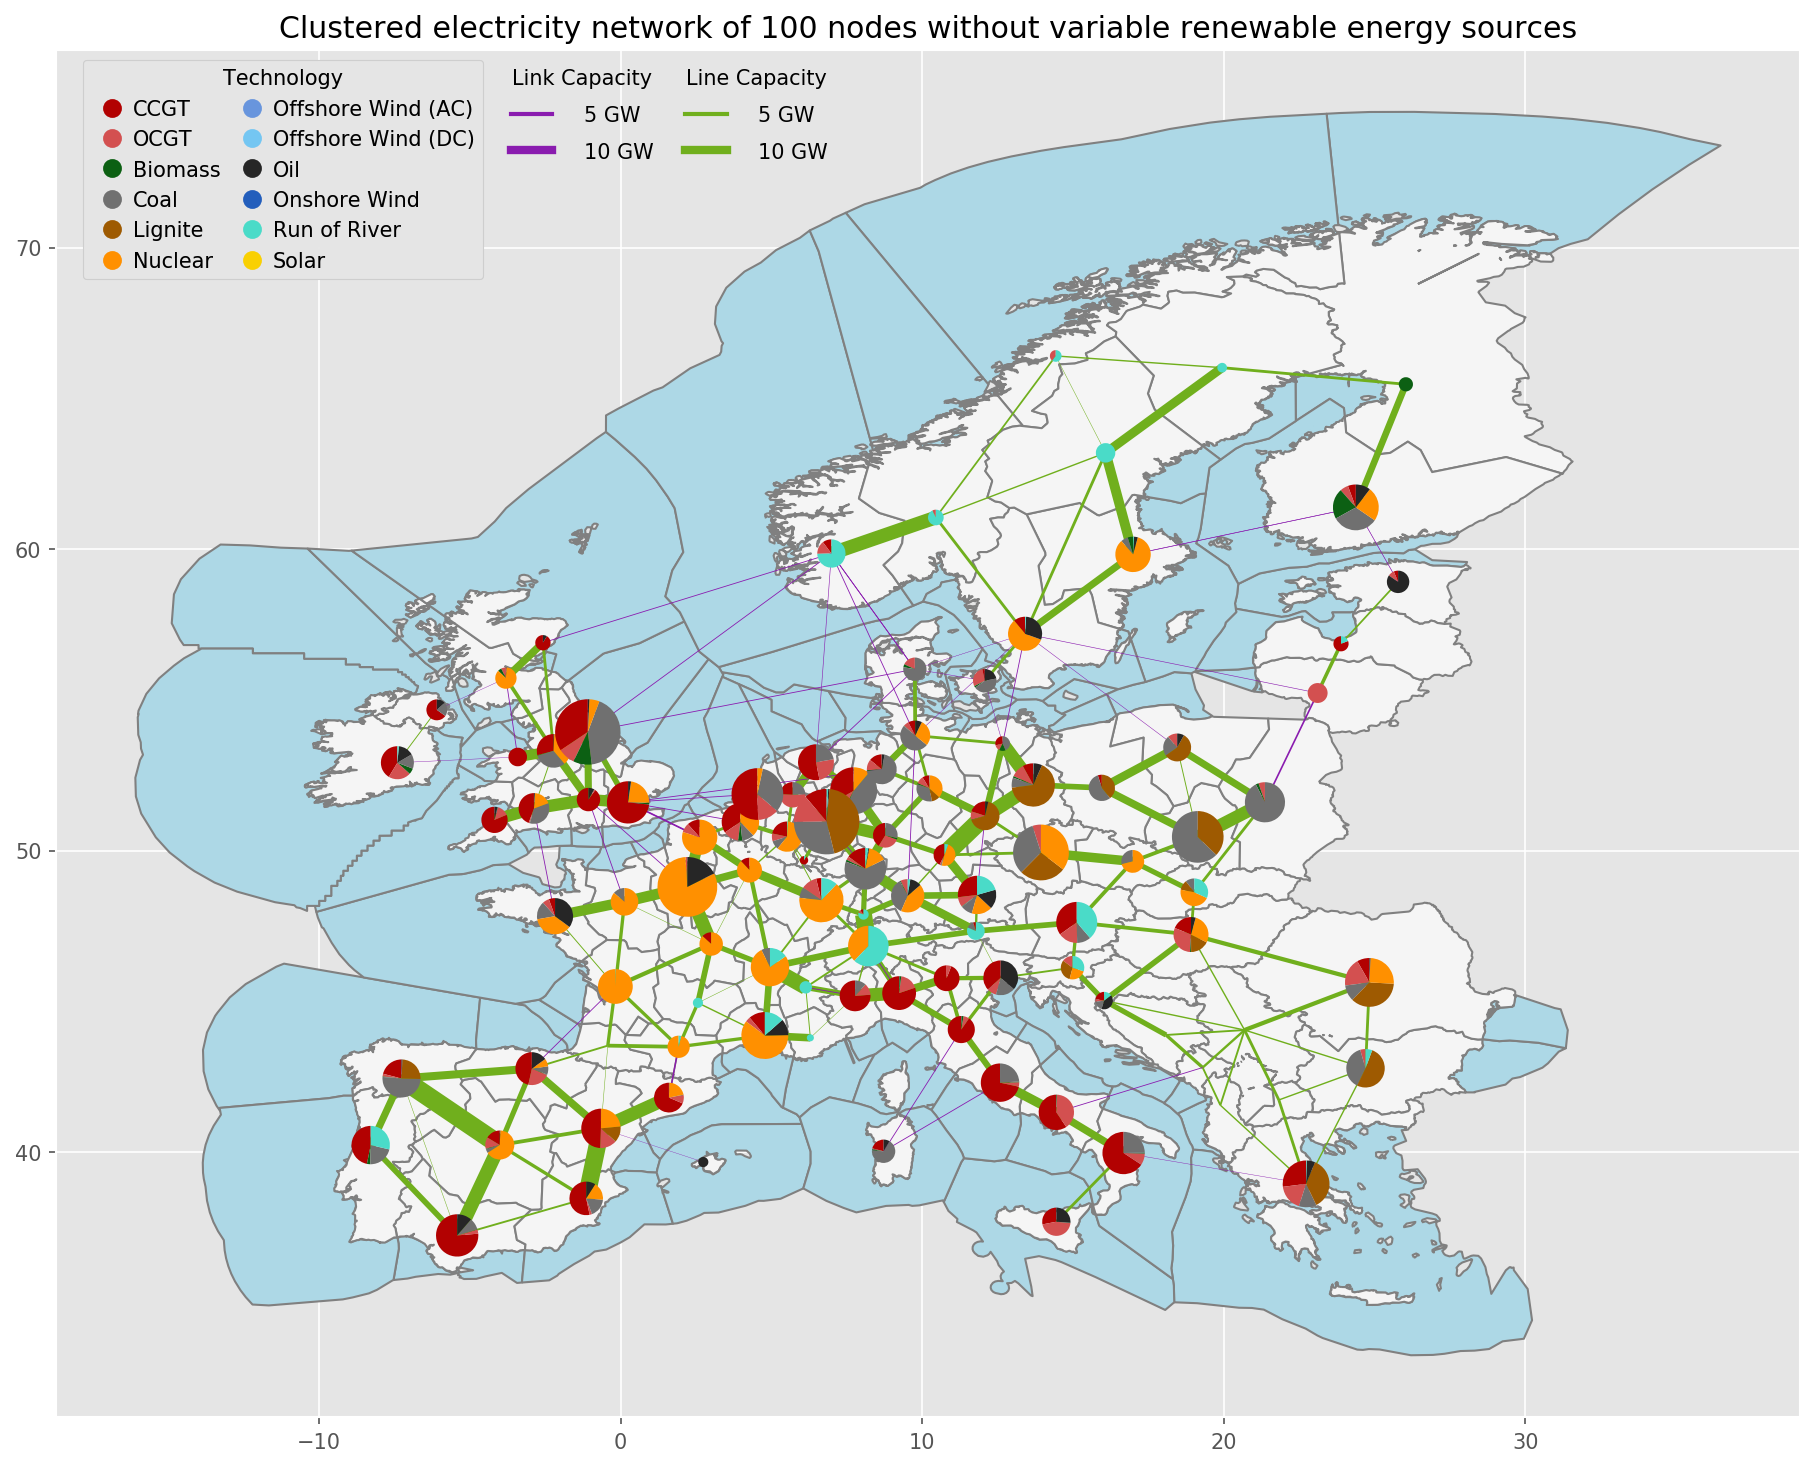 PyPSA-Eur Grid Model Simplified